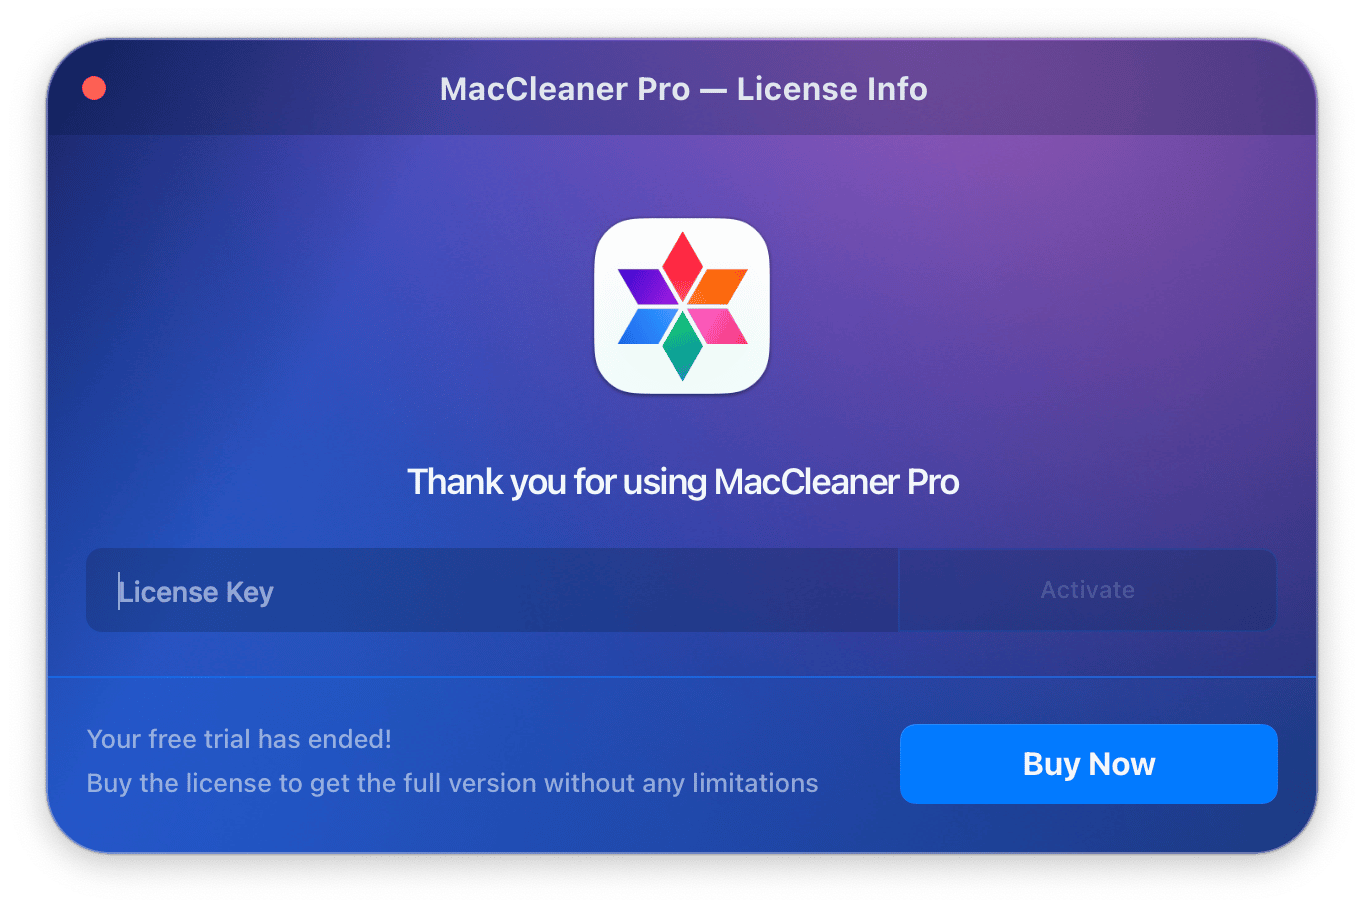 MacCleaner Pro License info window